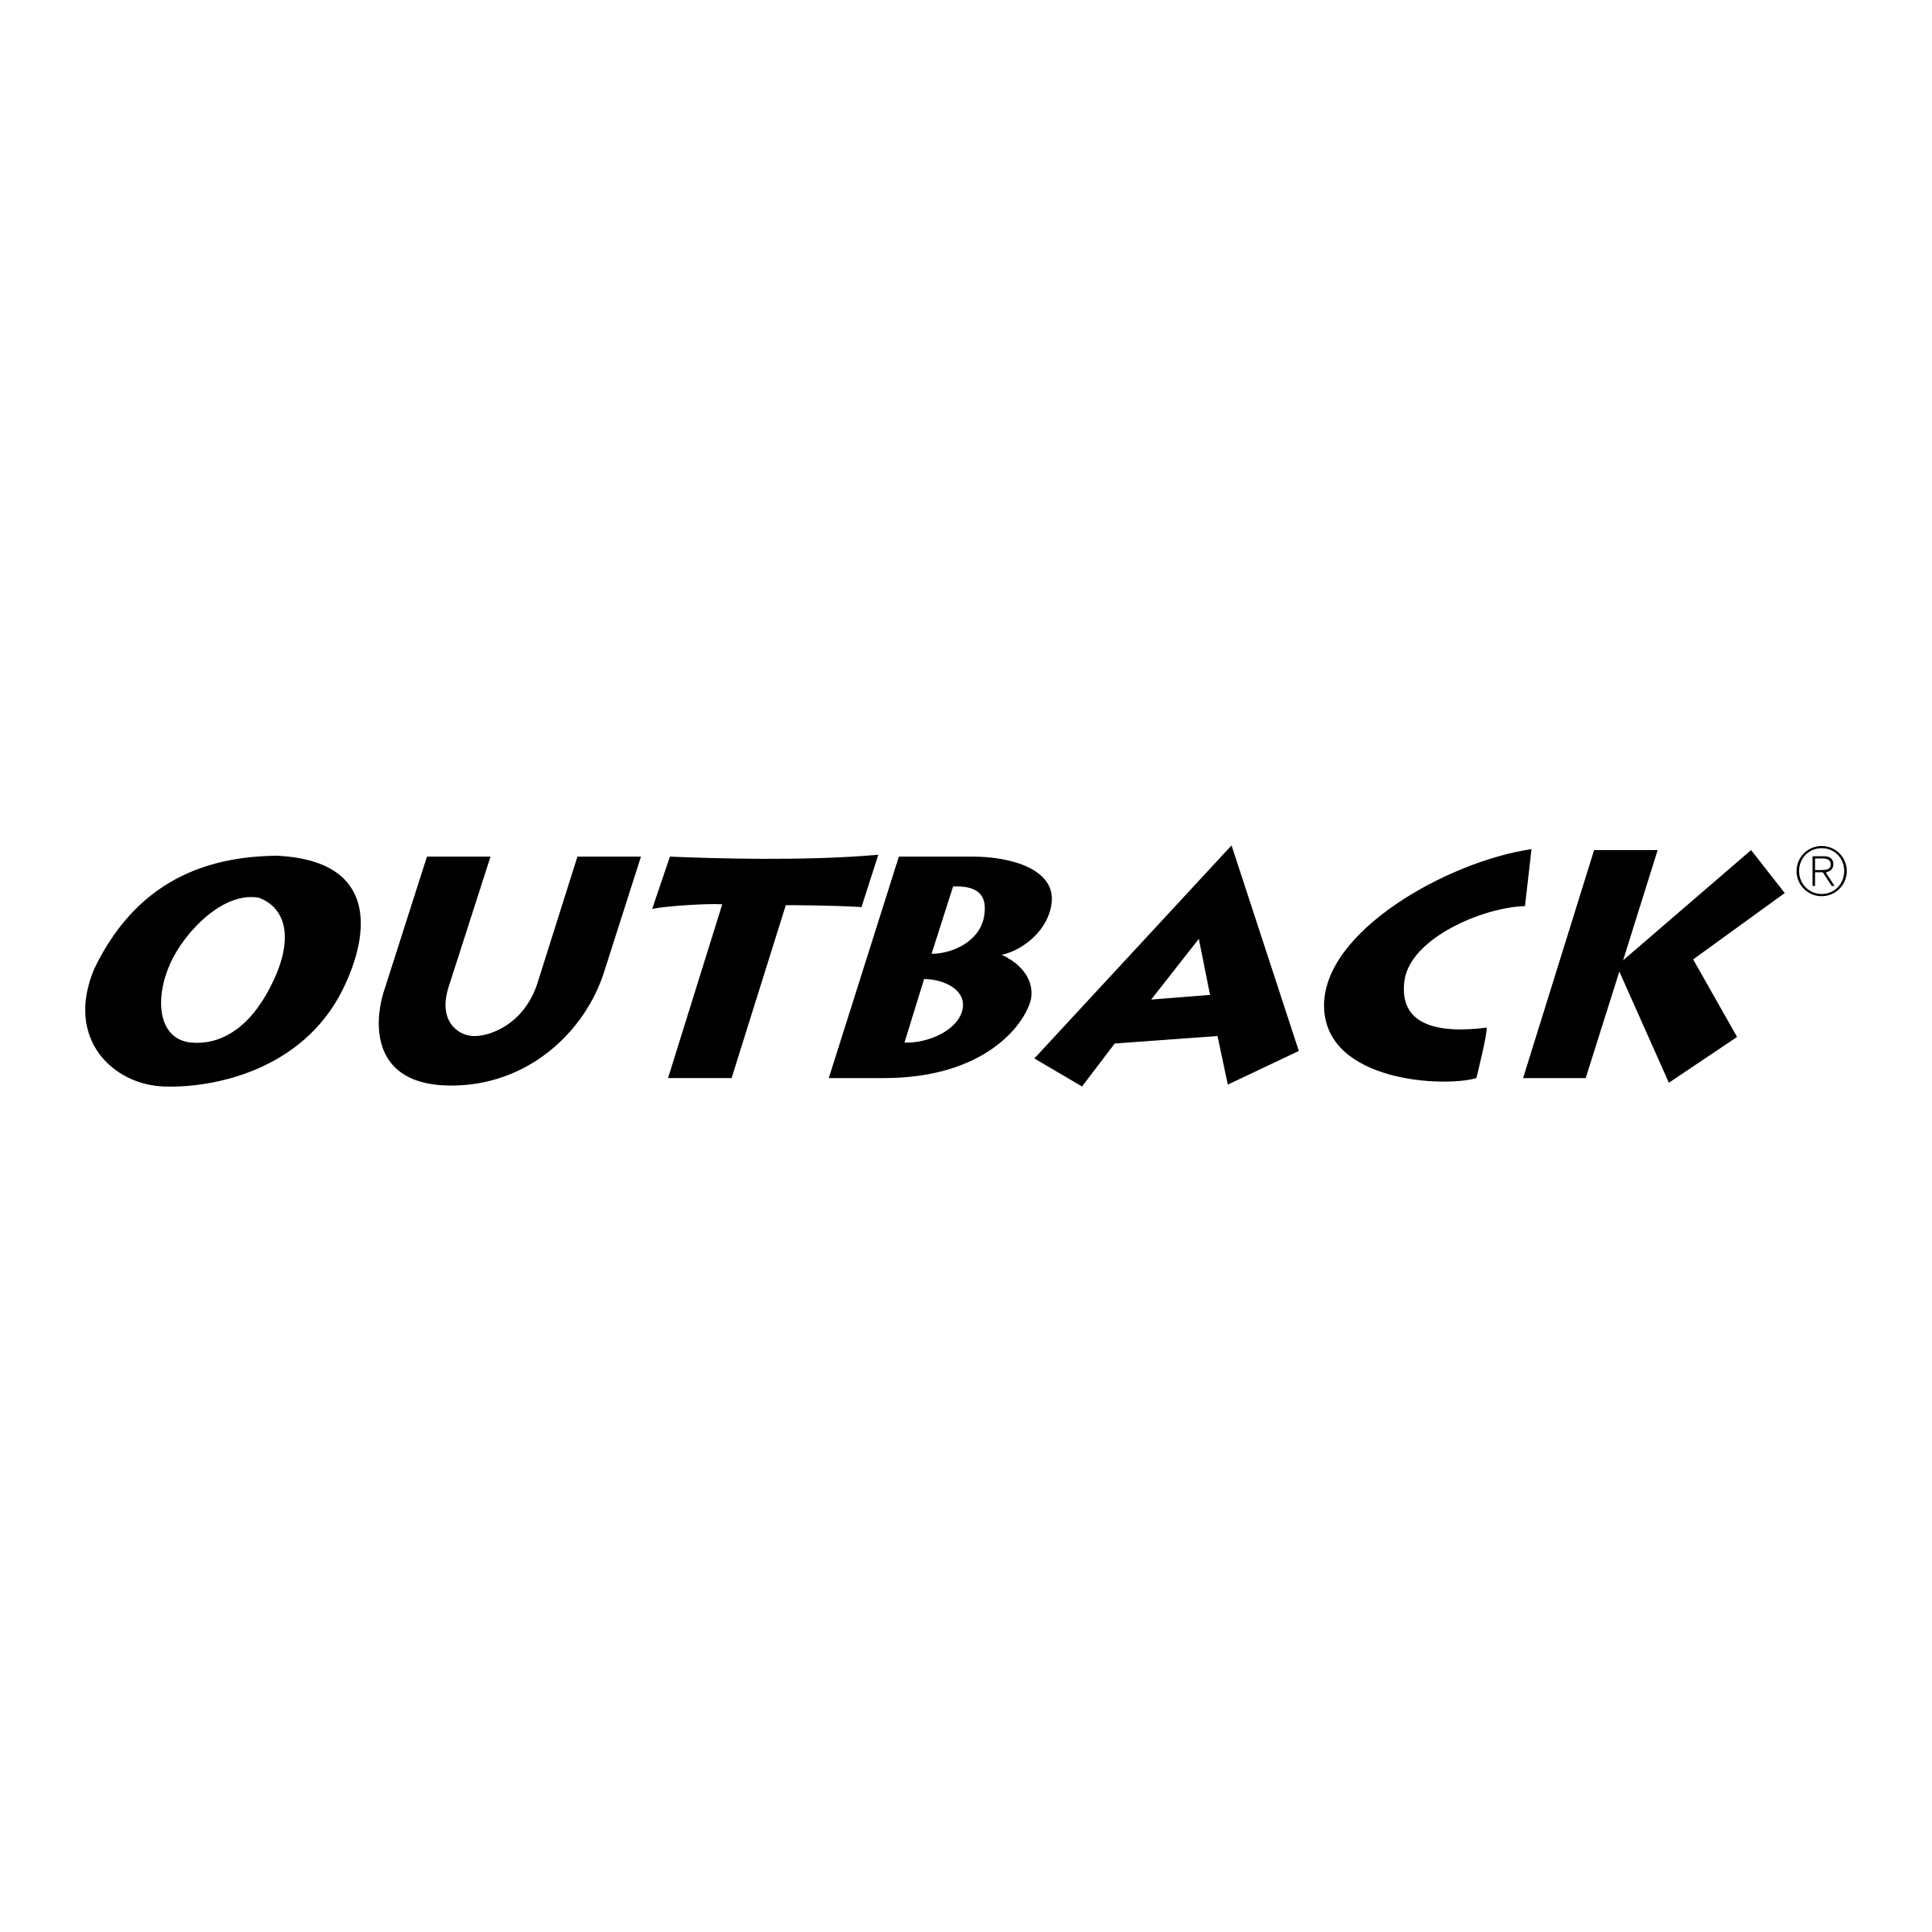 Outback Logo - Outback Logo PNG Transparent & SVG Vector - Freebie Supply